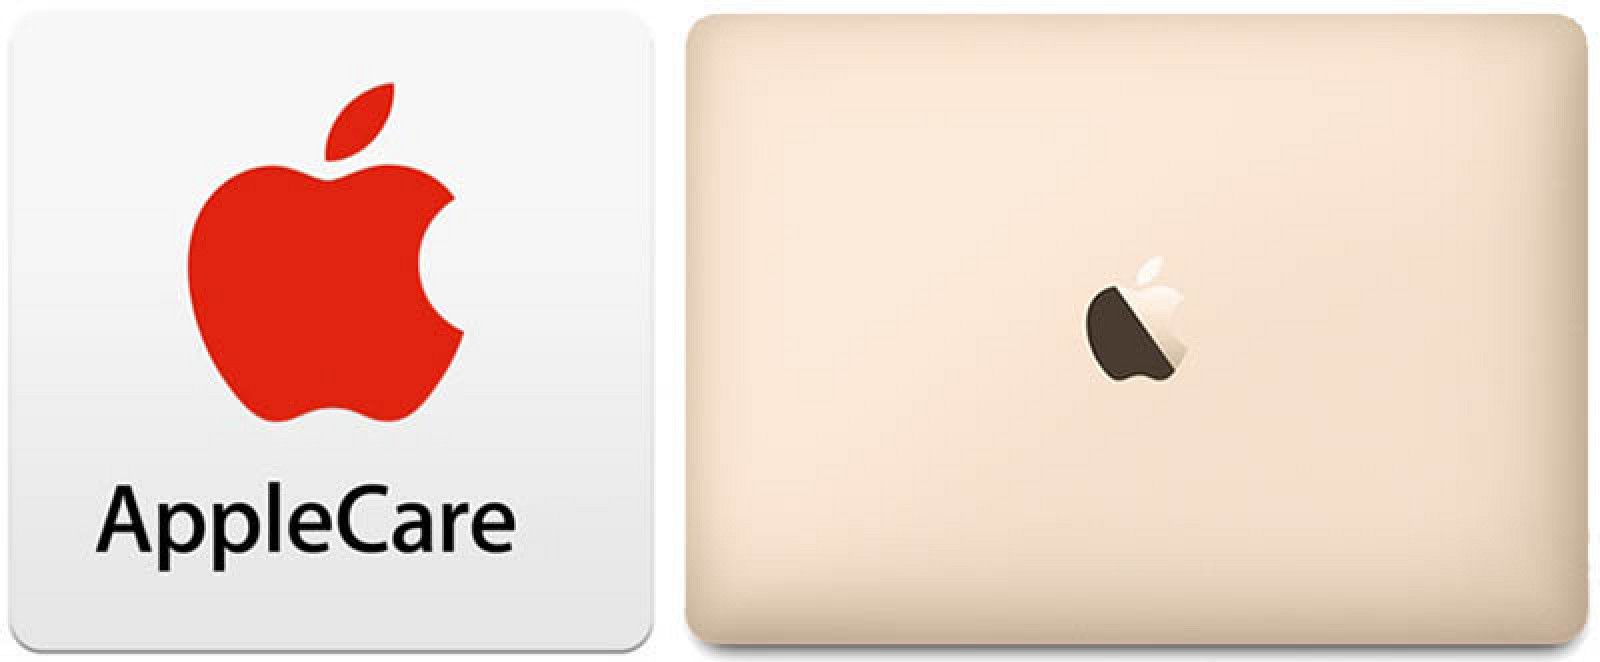 AppleCare-MacBook1.jpg